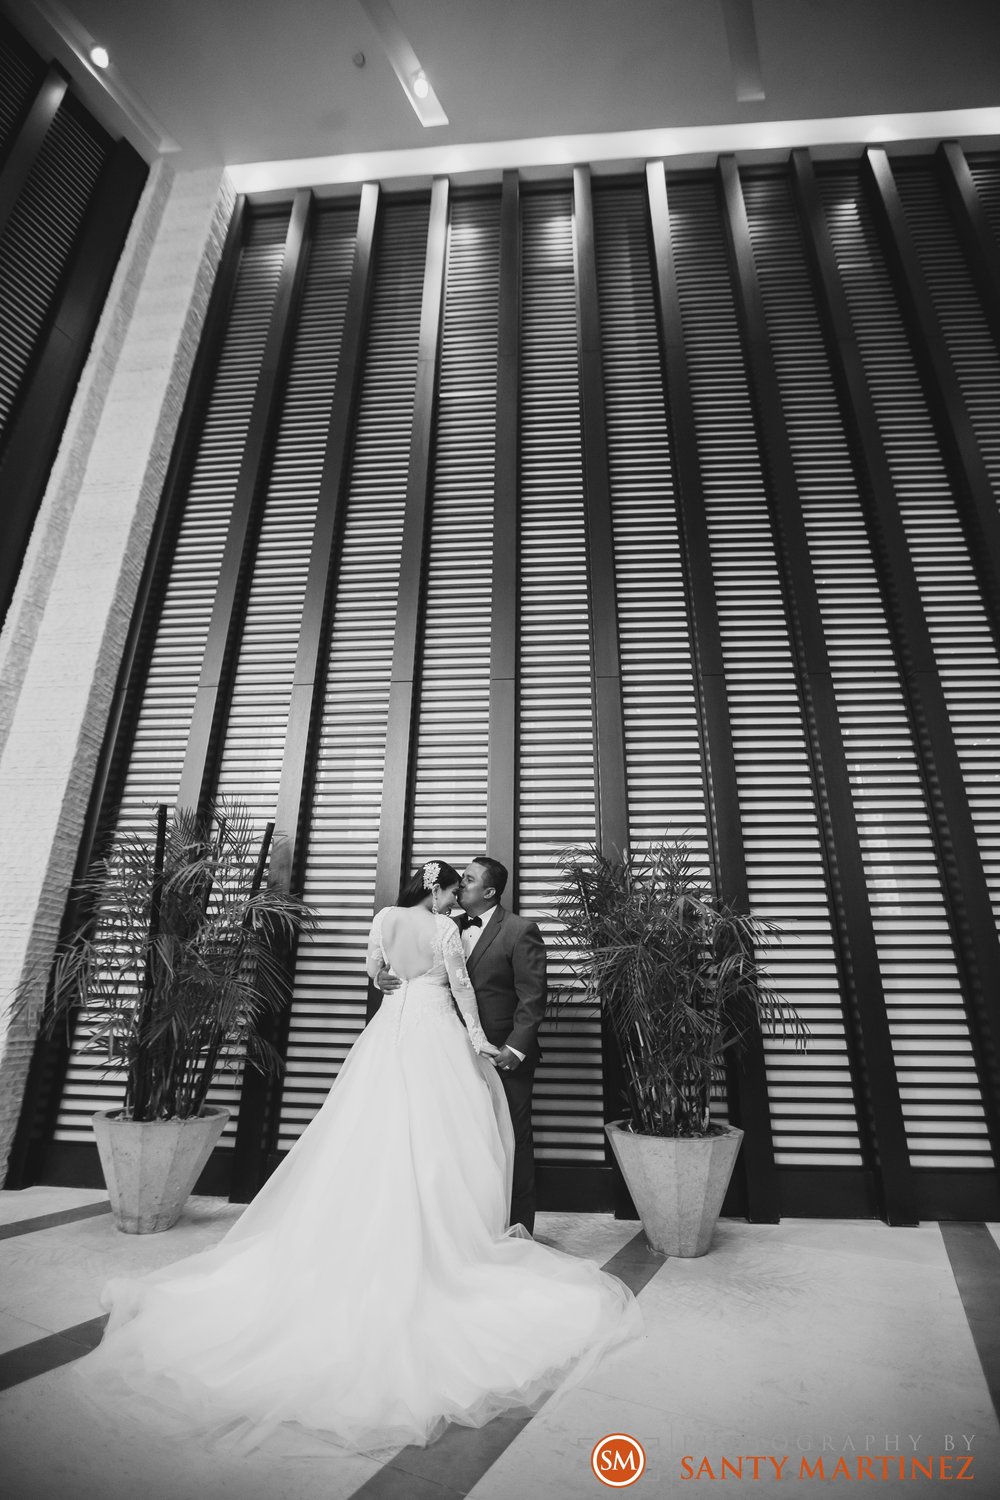 Wedding Epic Hotel Miami - Photography by Santy Martinez-37.jpg